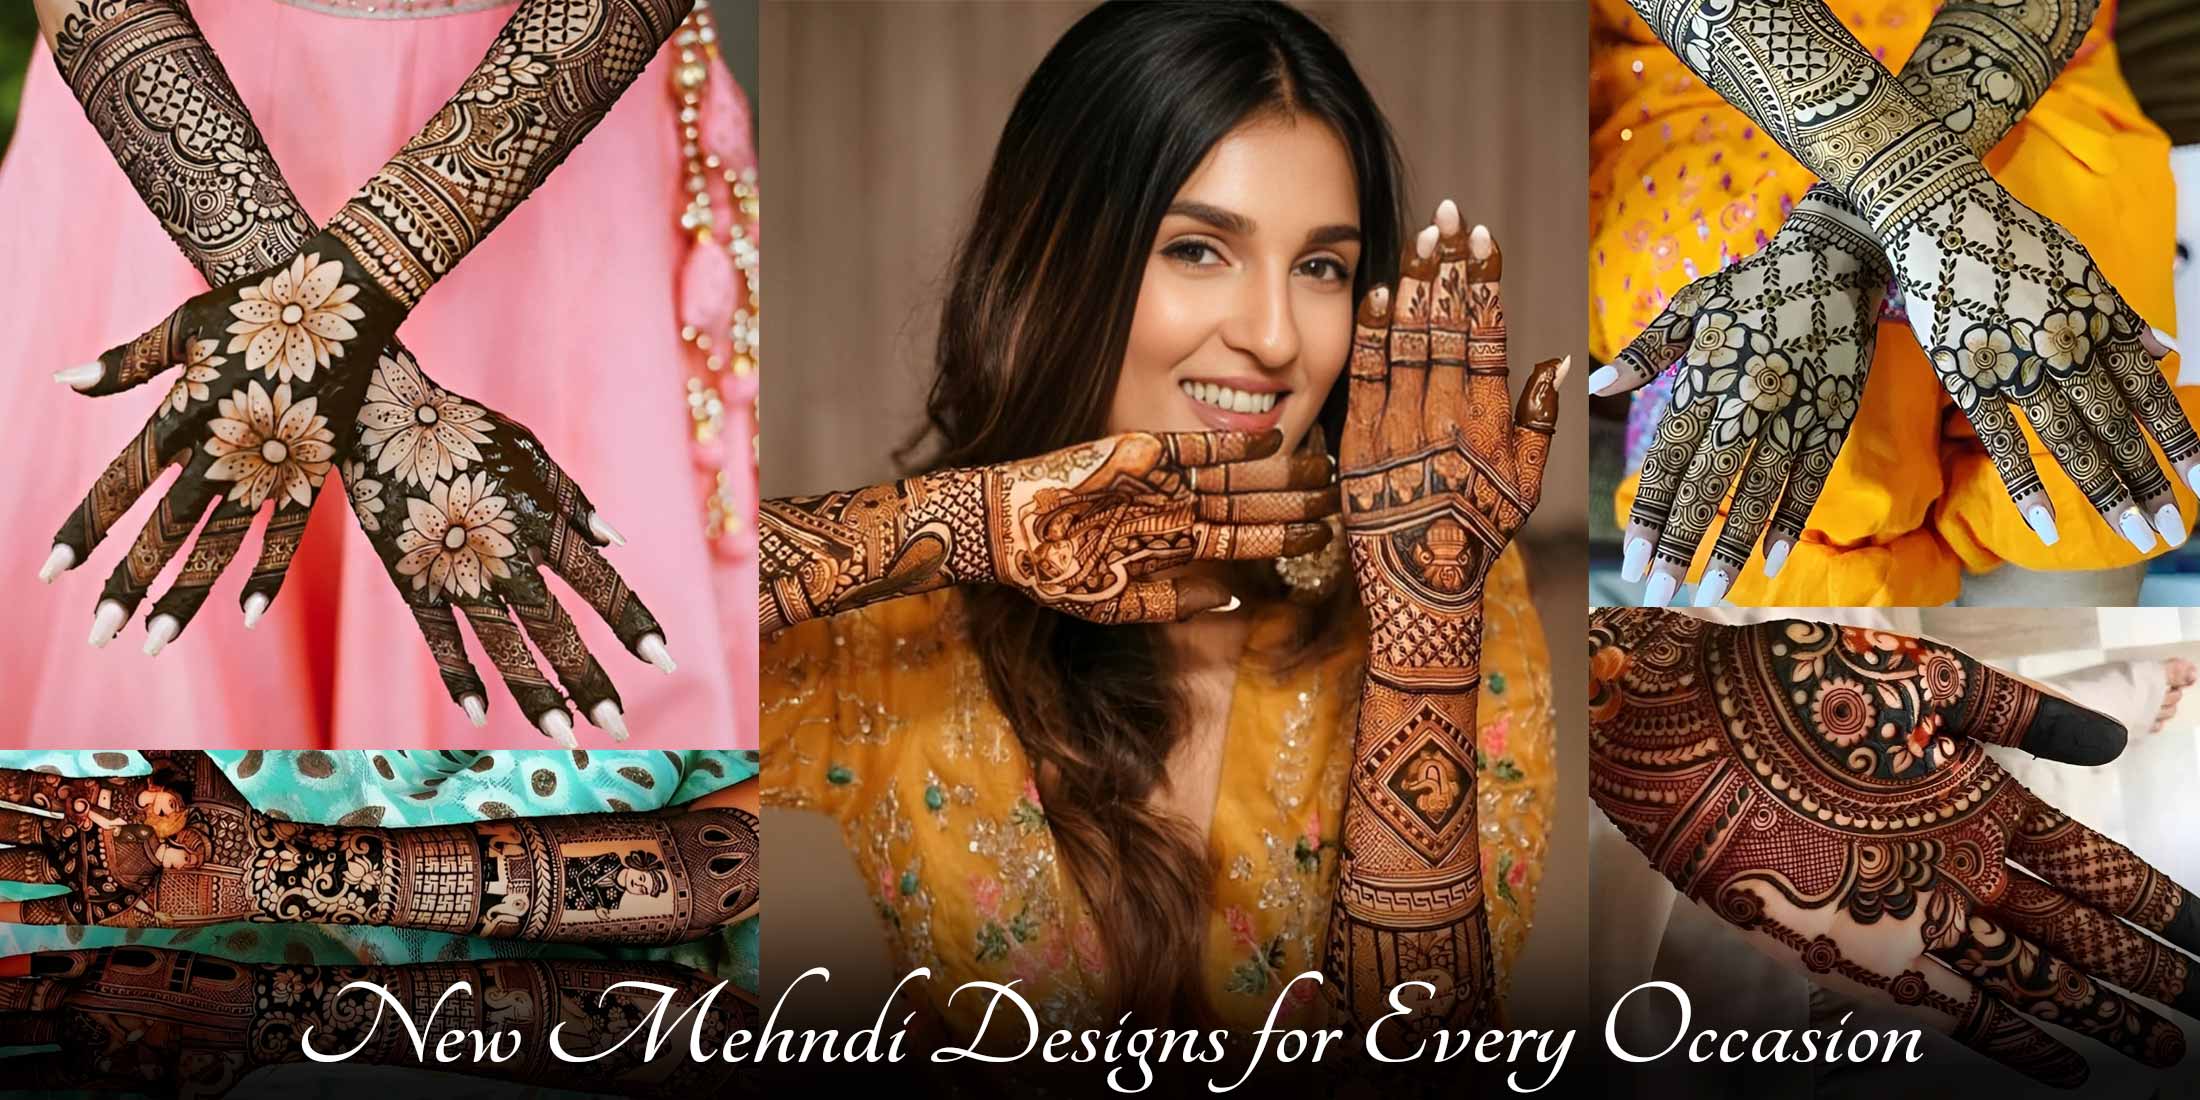 8 Different Types of Mehendi Designs